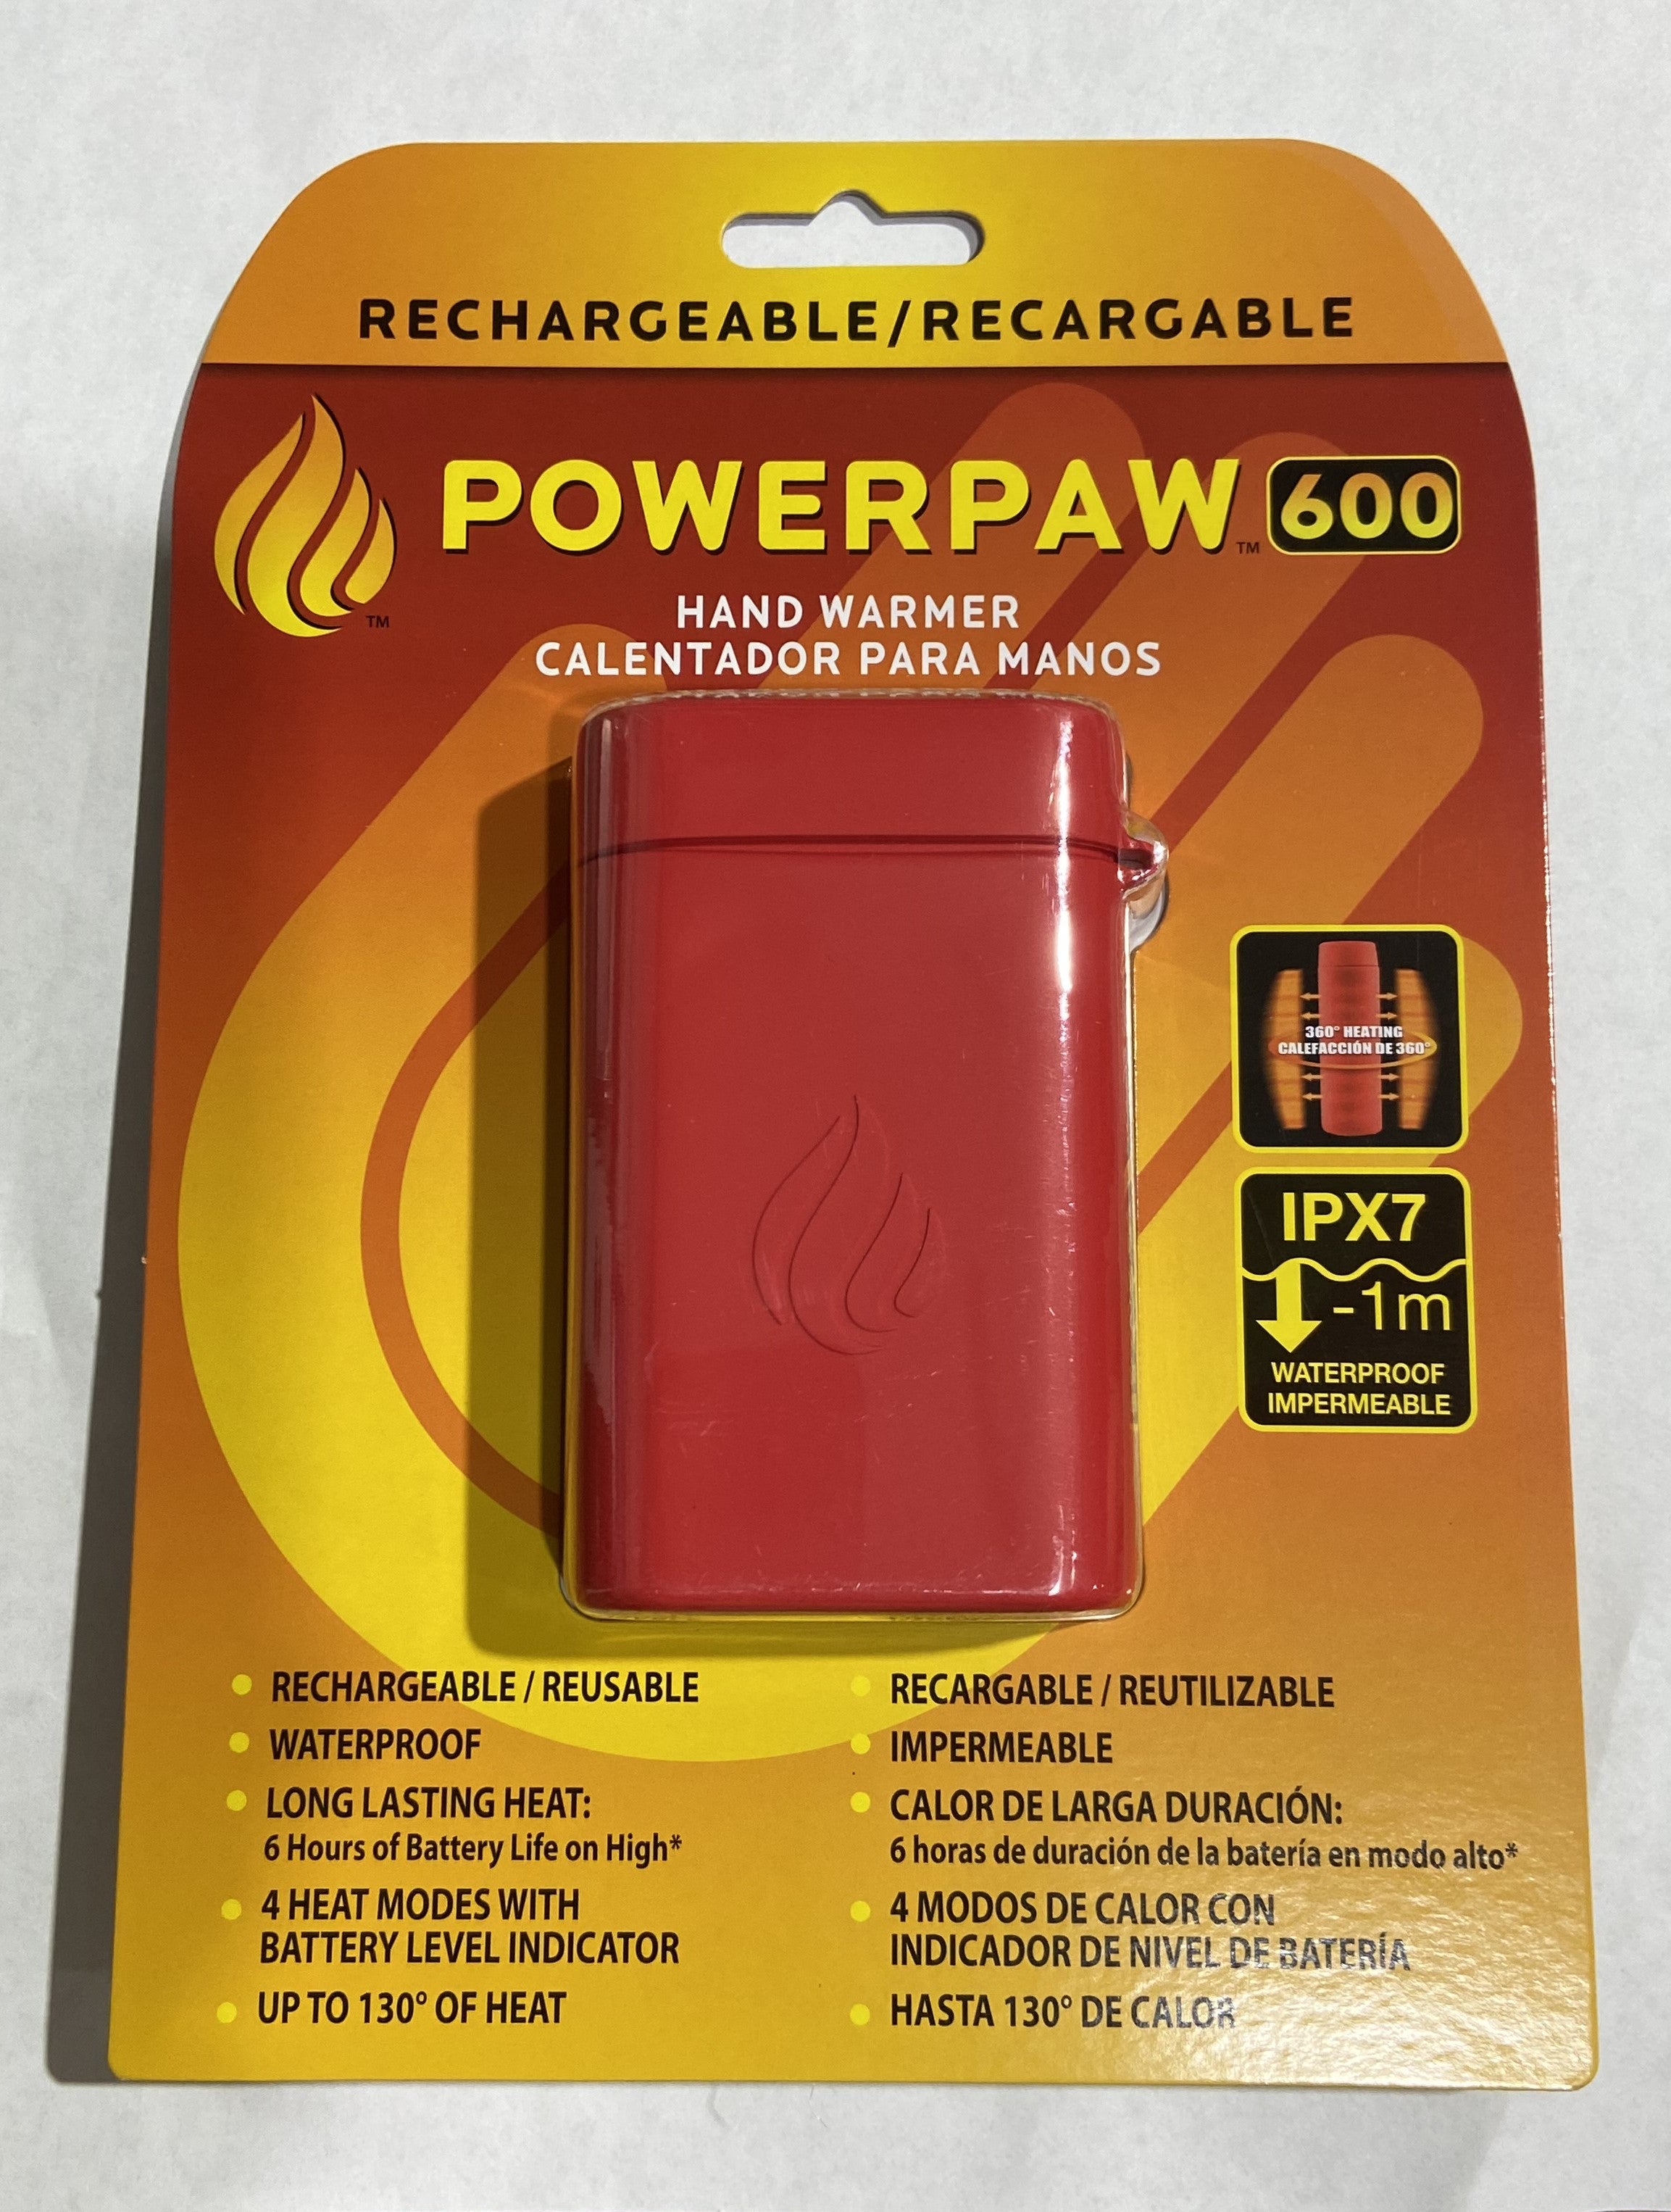 Hot Pawz Shop Orange Box Cutter Knife  Lightweight and Ergonomic Design –  Hot Pawz Packaging Tapes